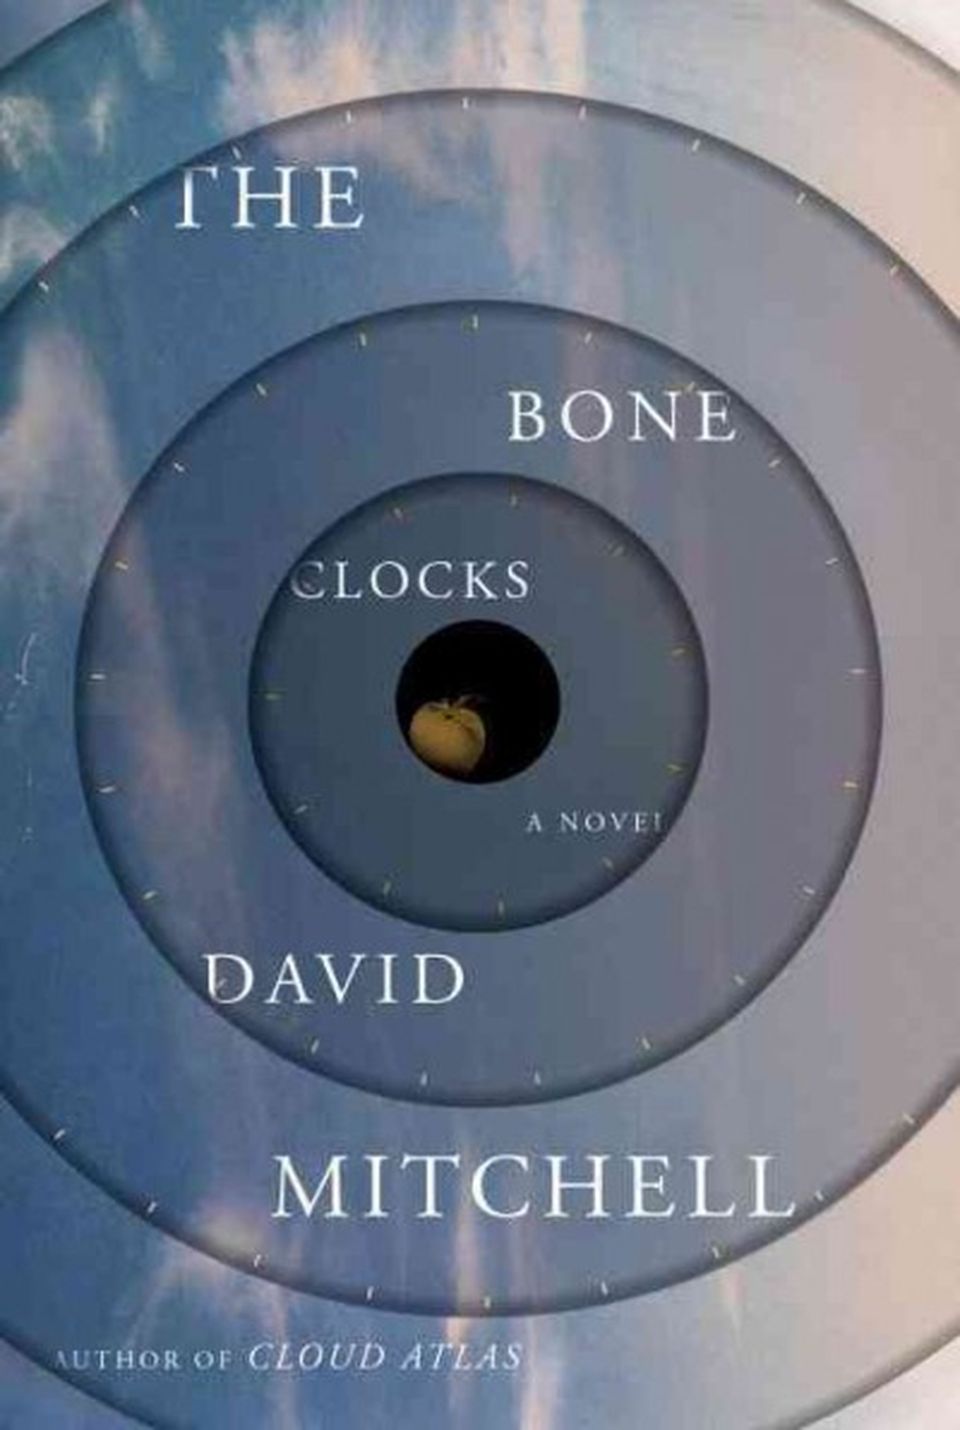 'The Bone Clocks: A Novel' by David Mitchell